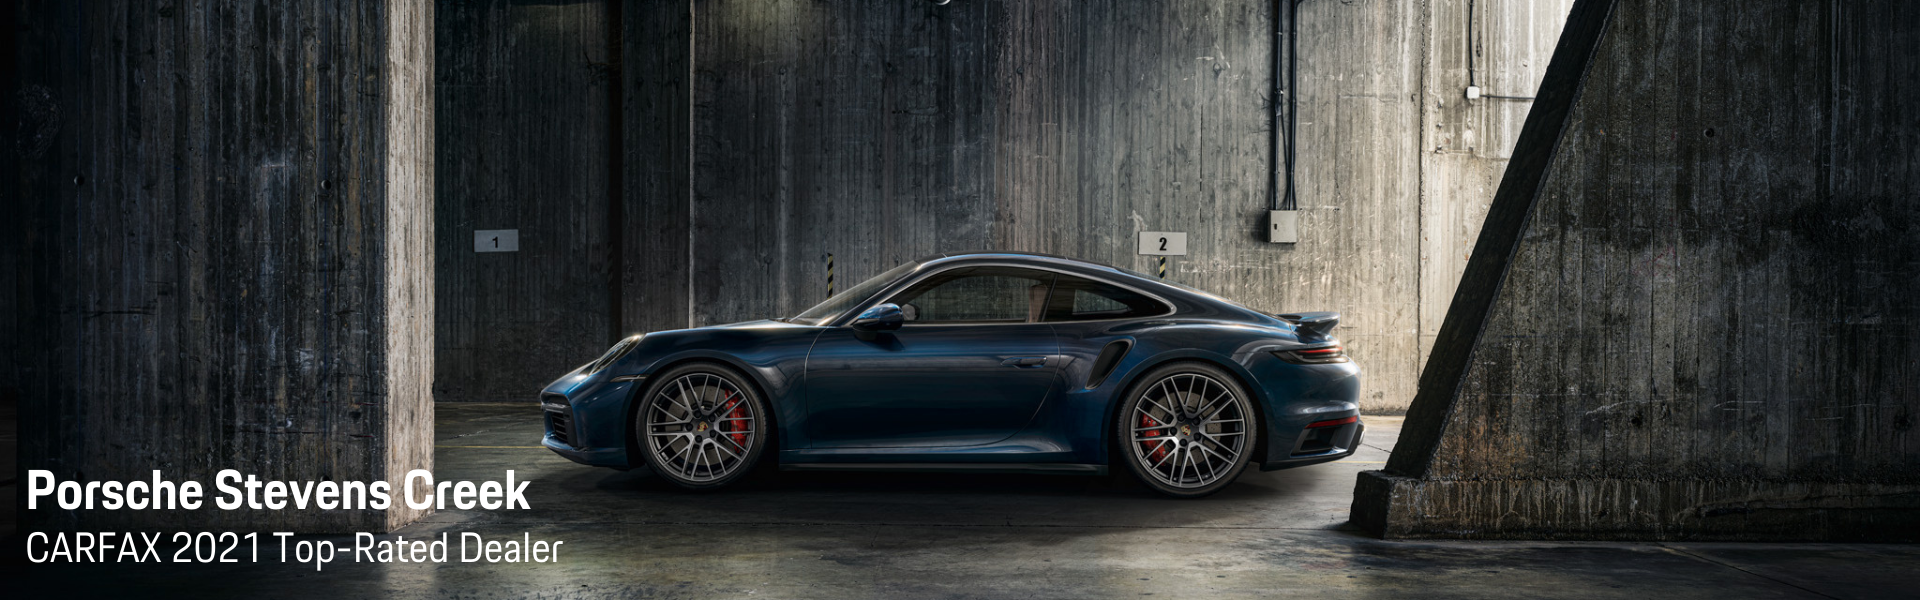 Porsche North Scottsdale - CarFax 2021 Top-Rated Dealer